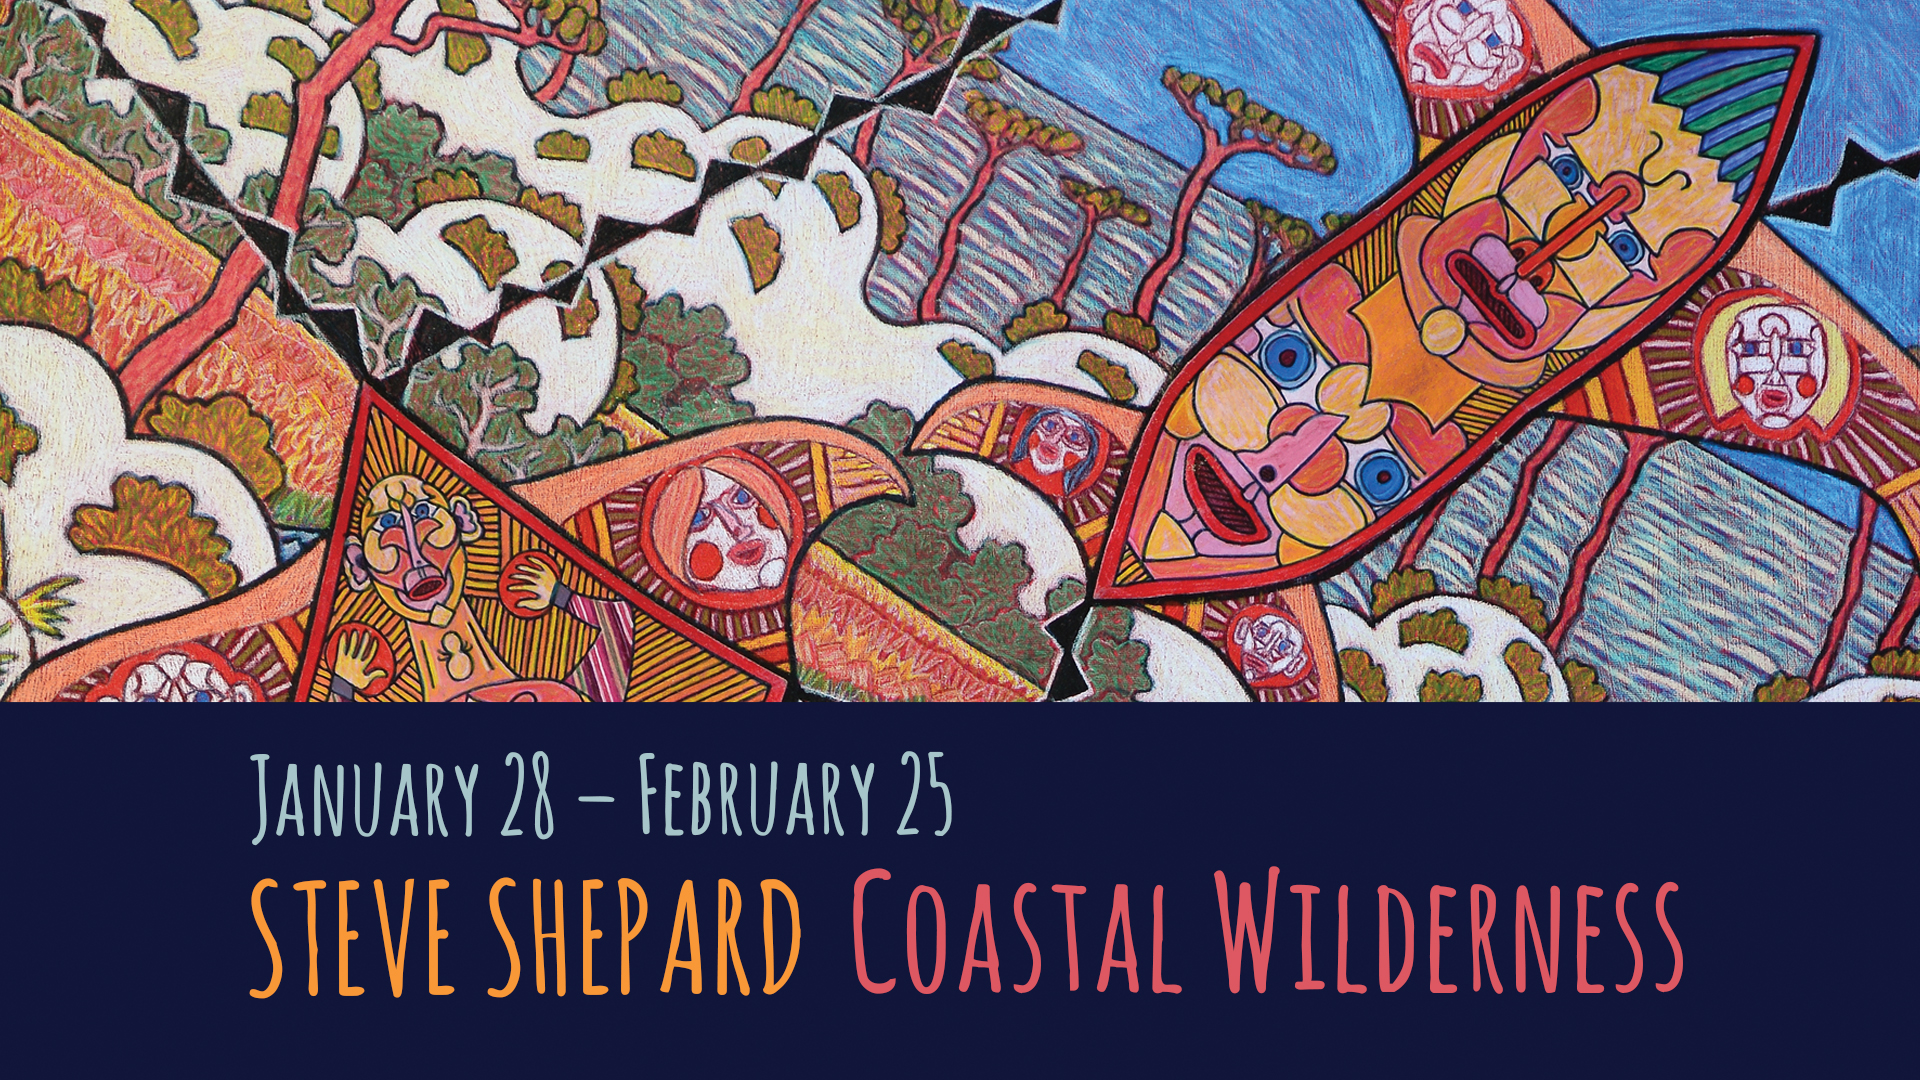 GCSC Visual and Performing Arts Presents Coastal Wilderness, Drawings by Steve Shepard